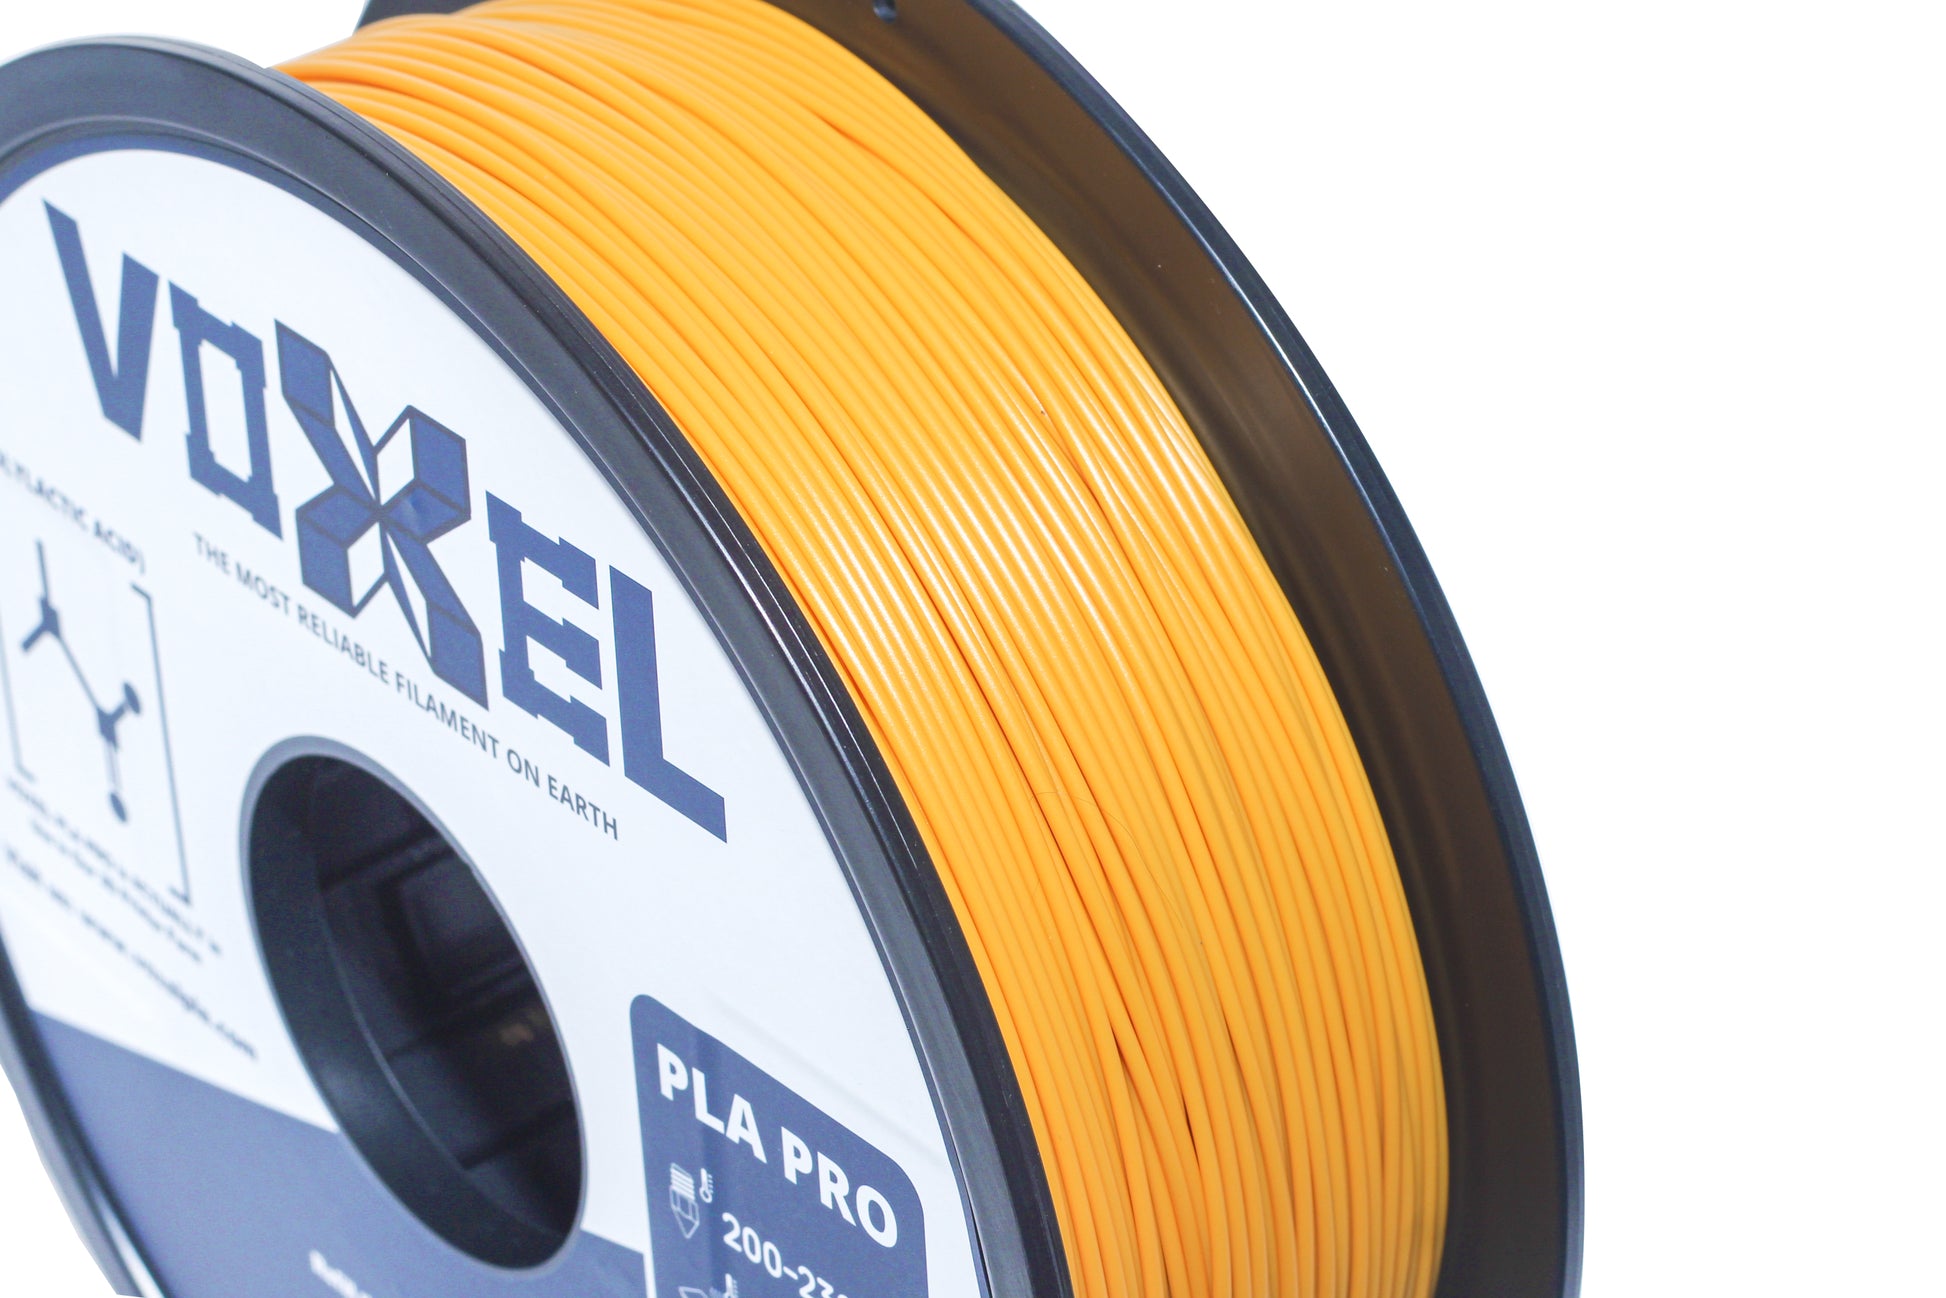 VOXELPETG PETG Plus Red Filament - $16.99 1.75mm for FDM 3D Printer –  VOXELPLA